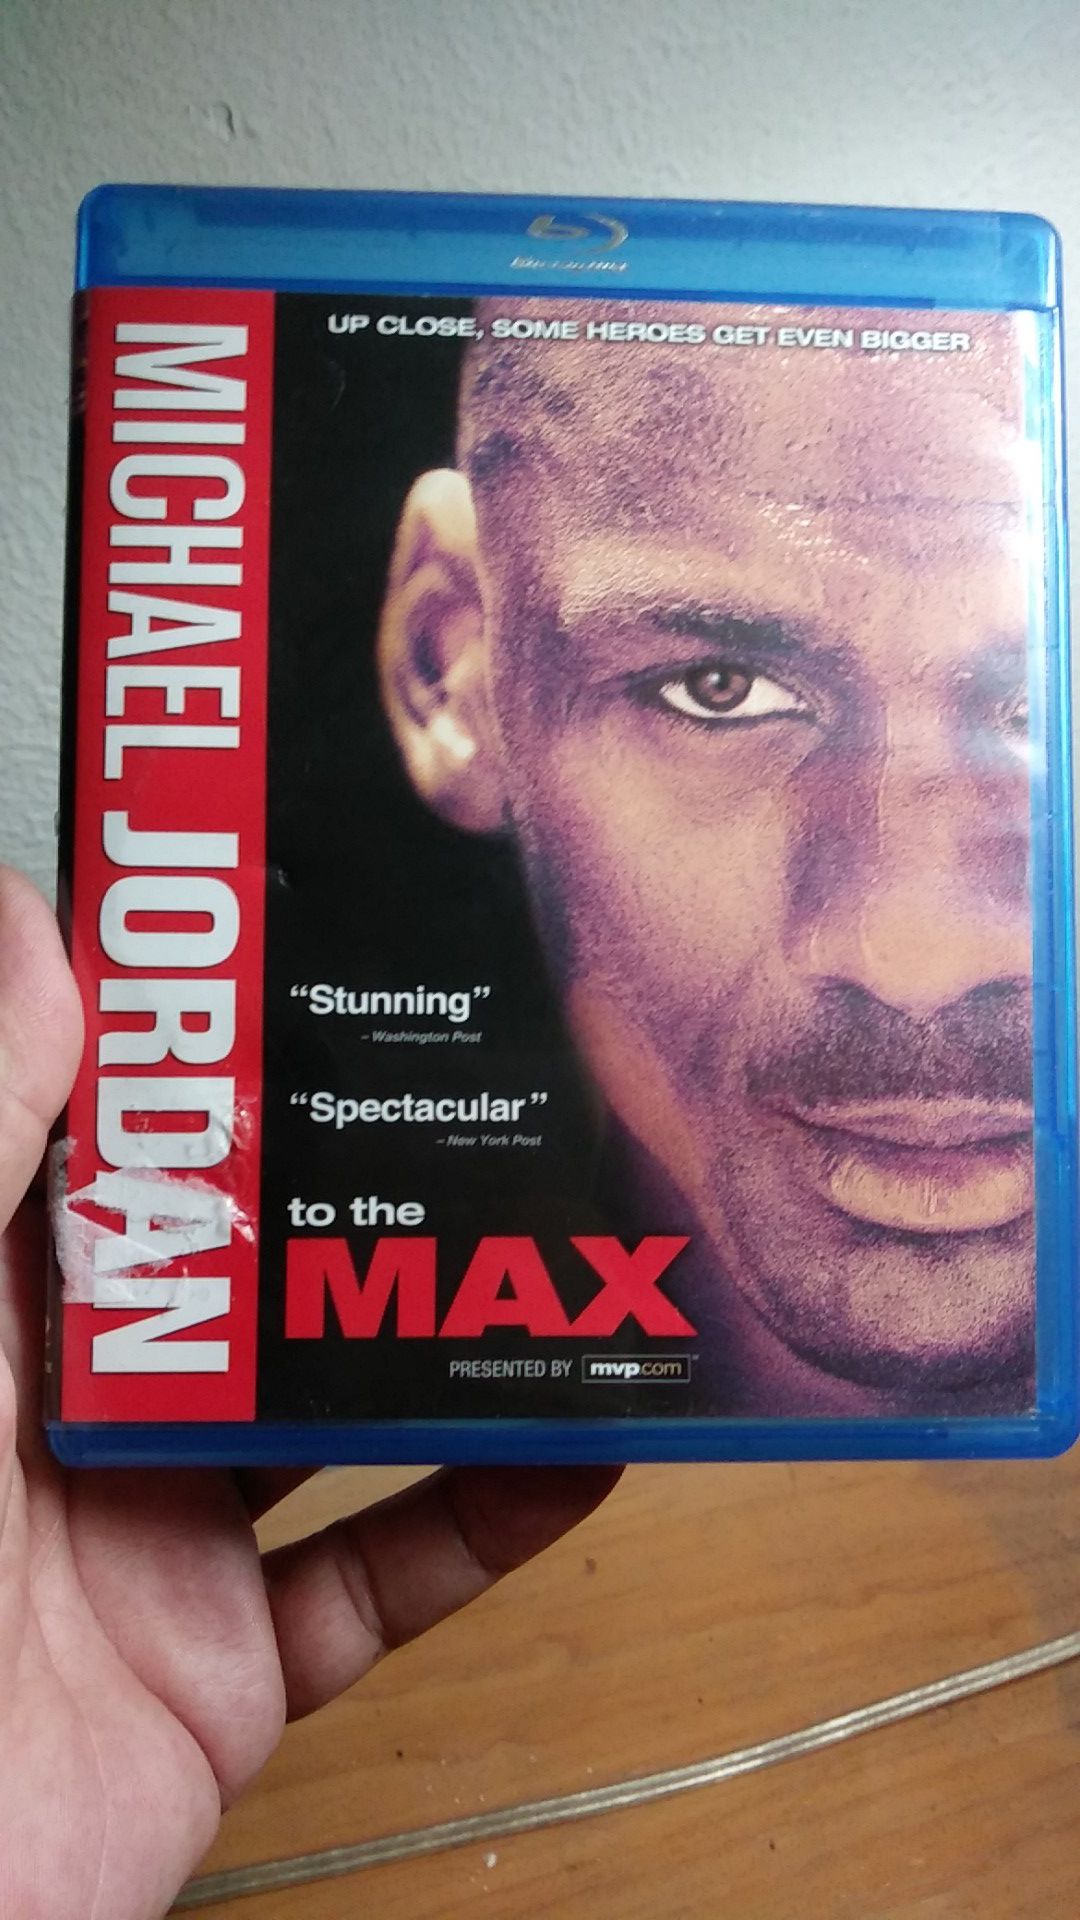 Michael Jordan Blu-ray to the max